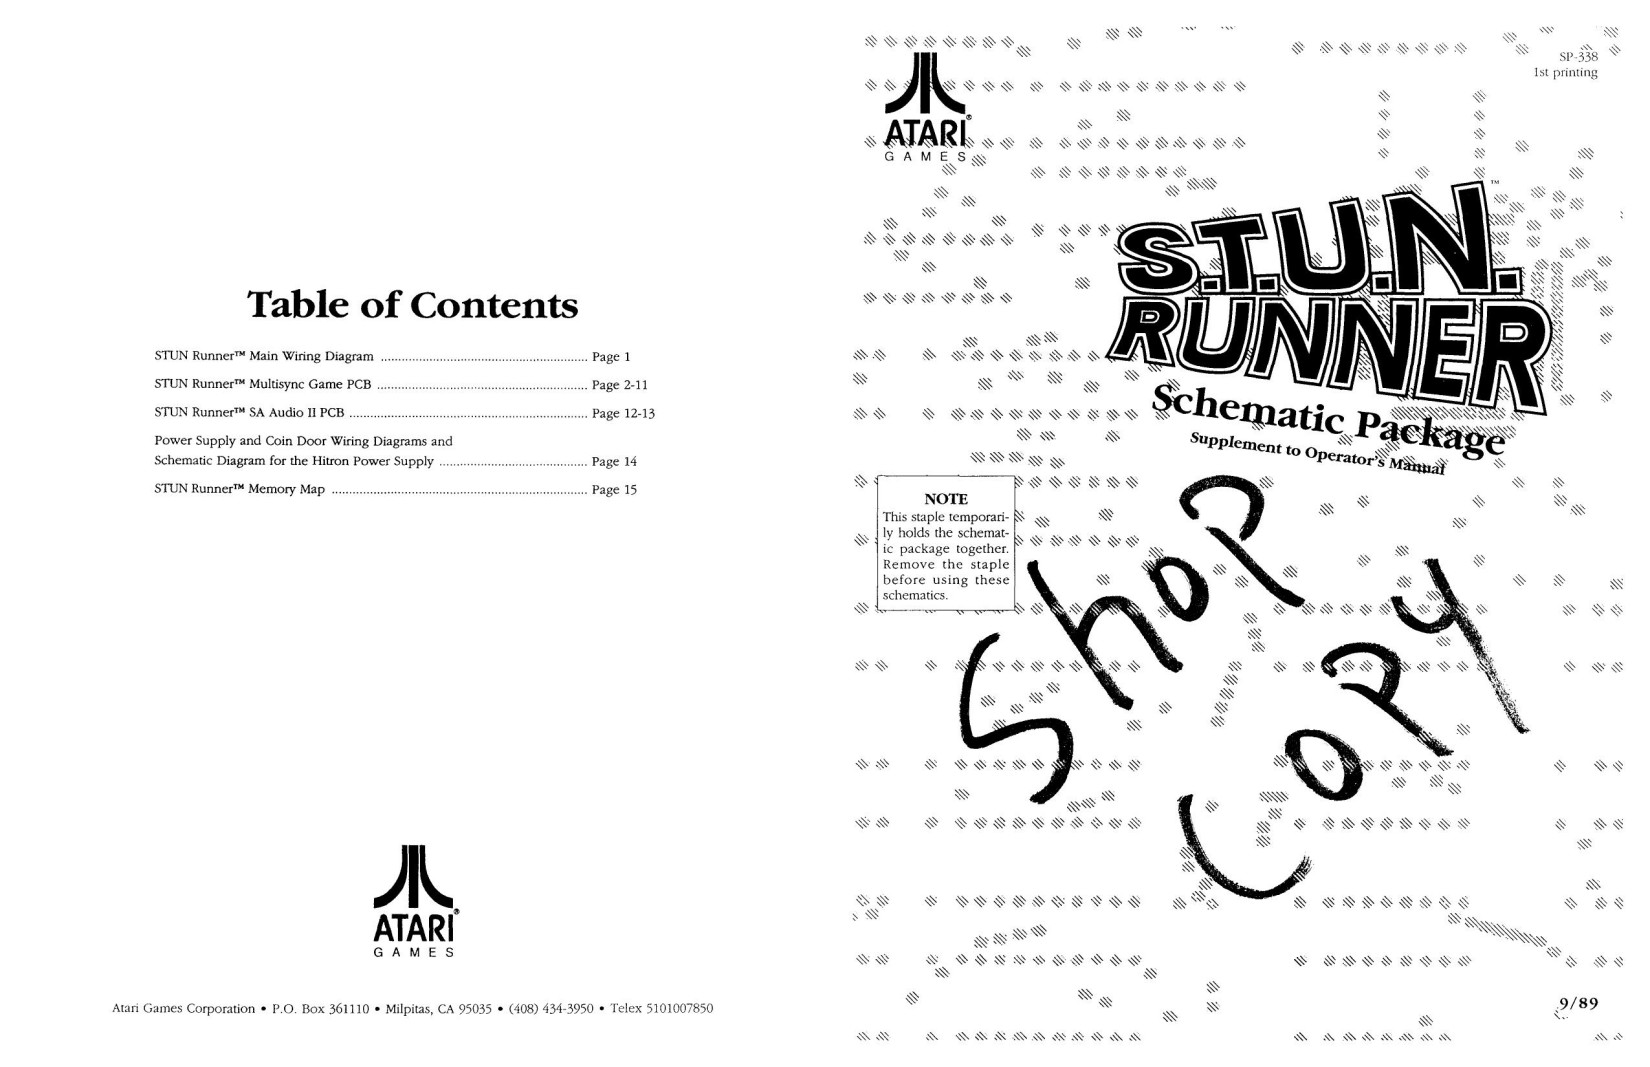 Stun Runner SP-338 1st Printing